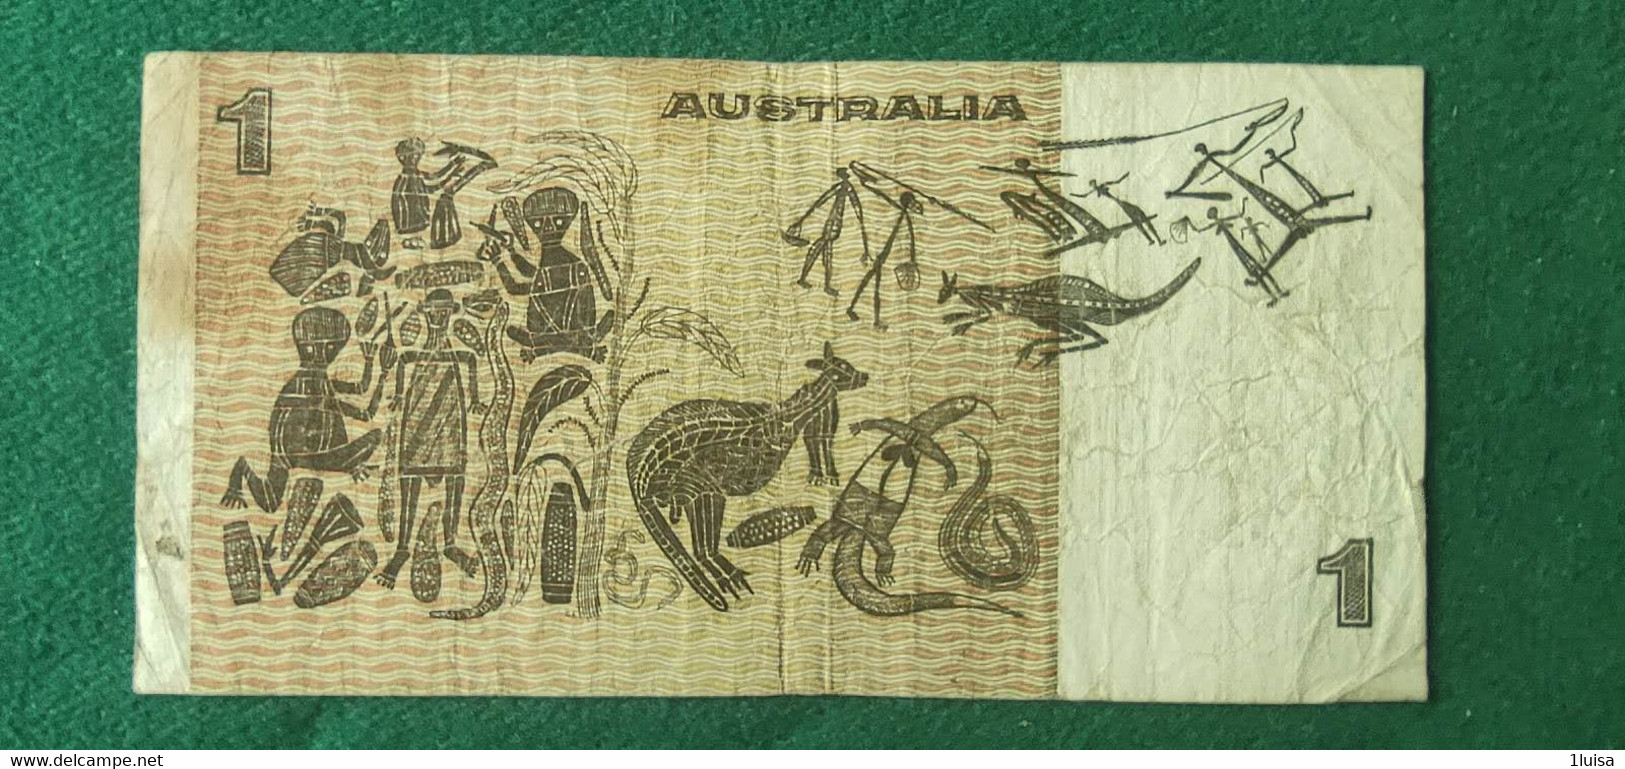 Australia 1 Dollar - 1988 (10$ Polymer Notes)